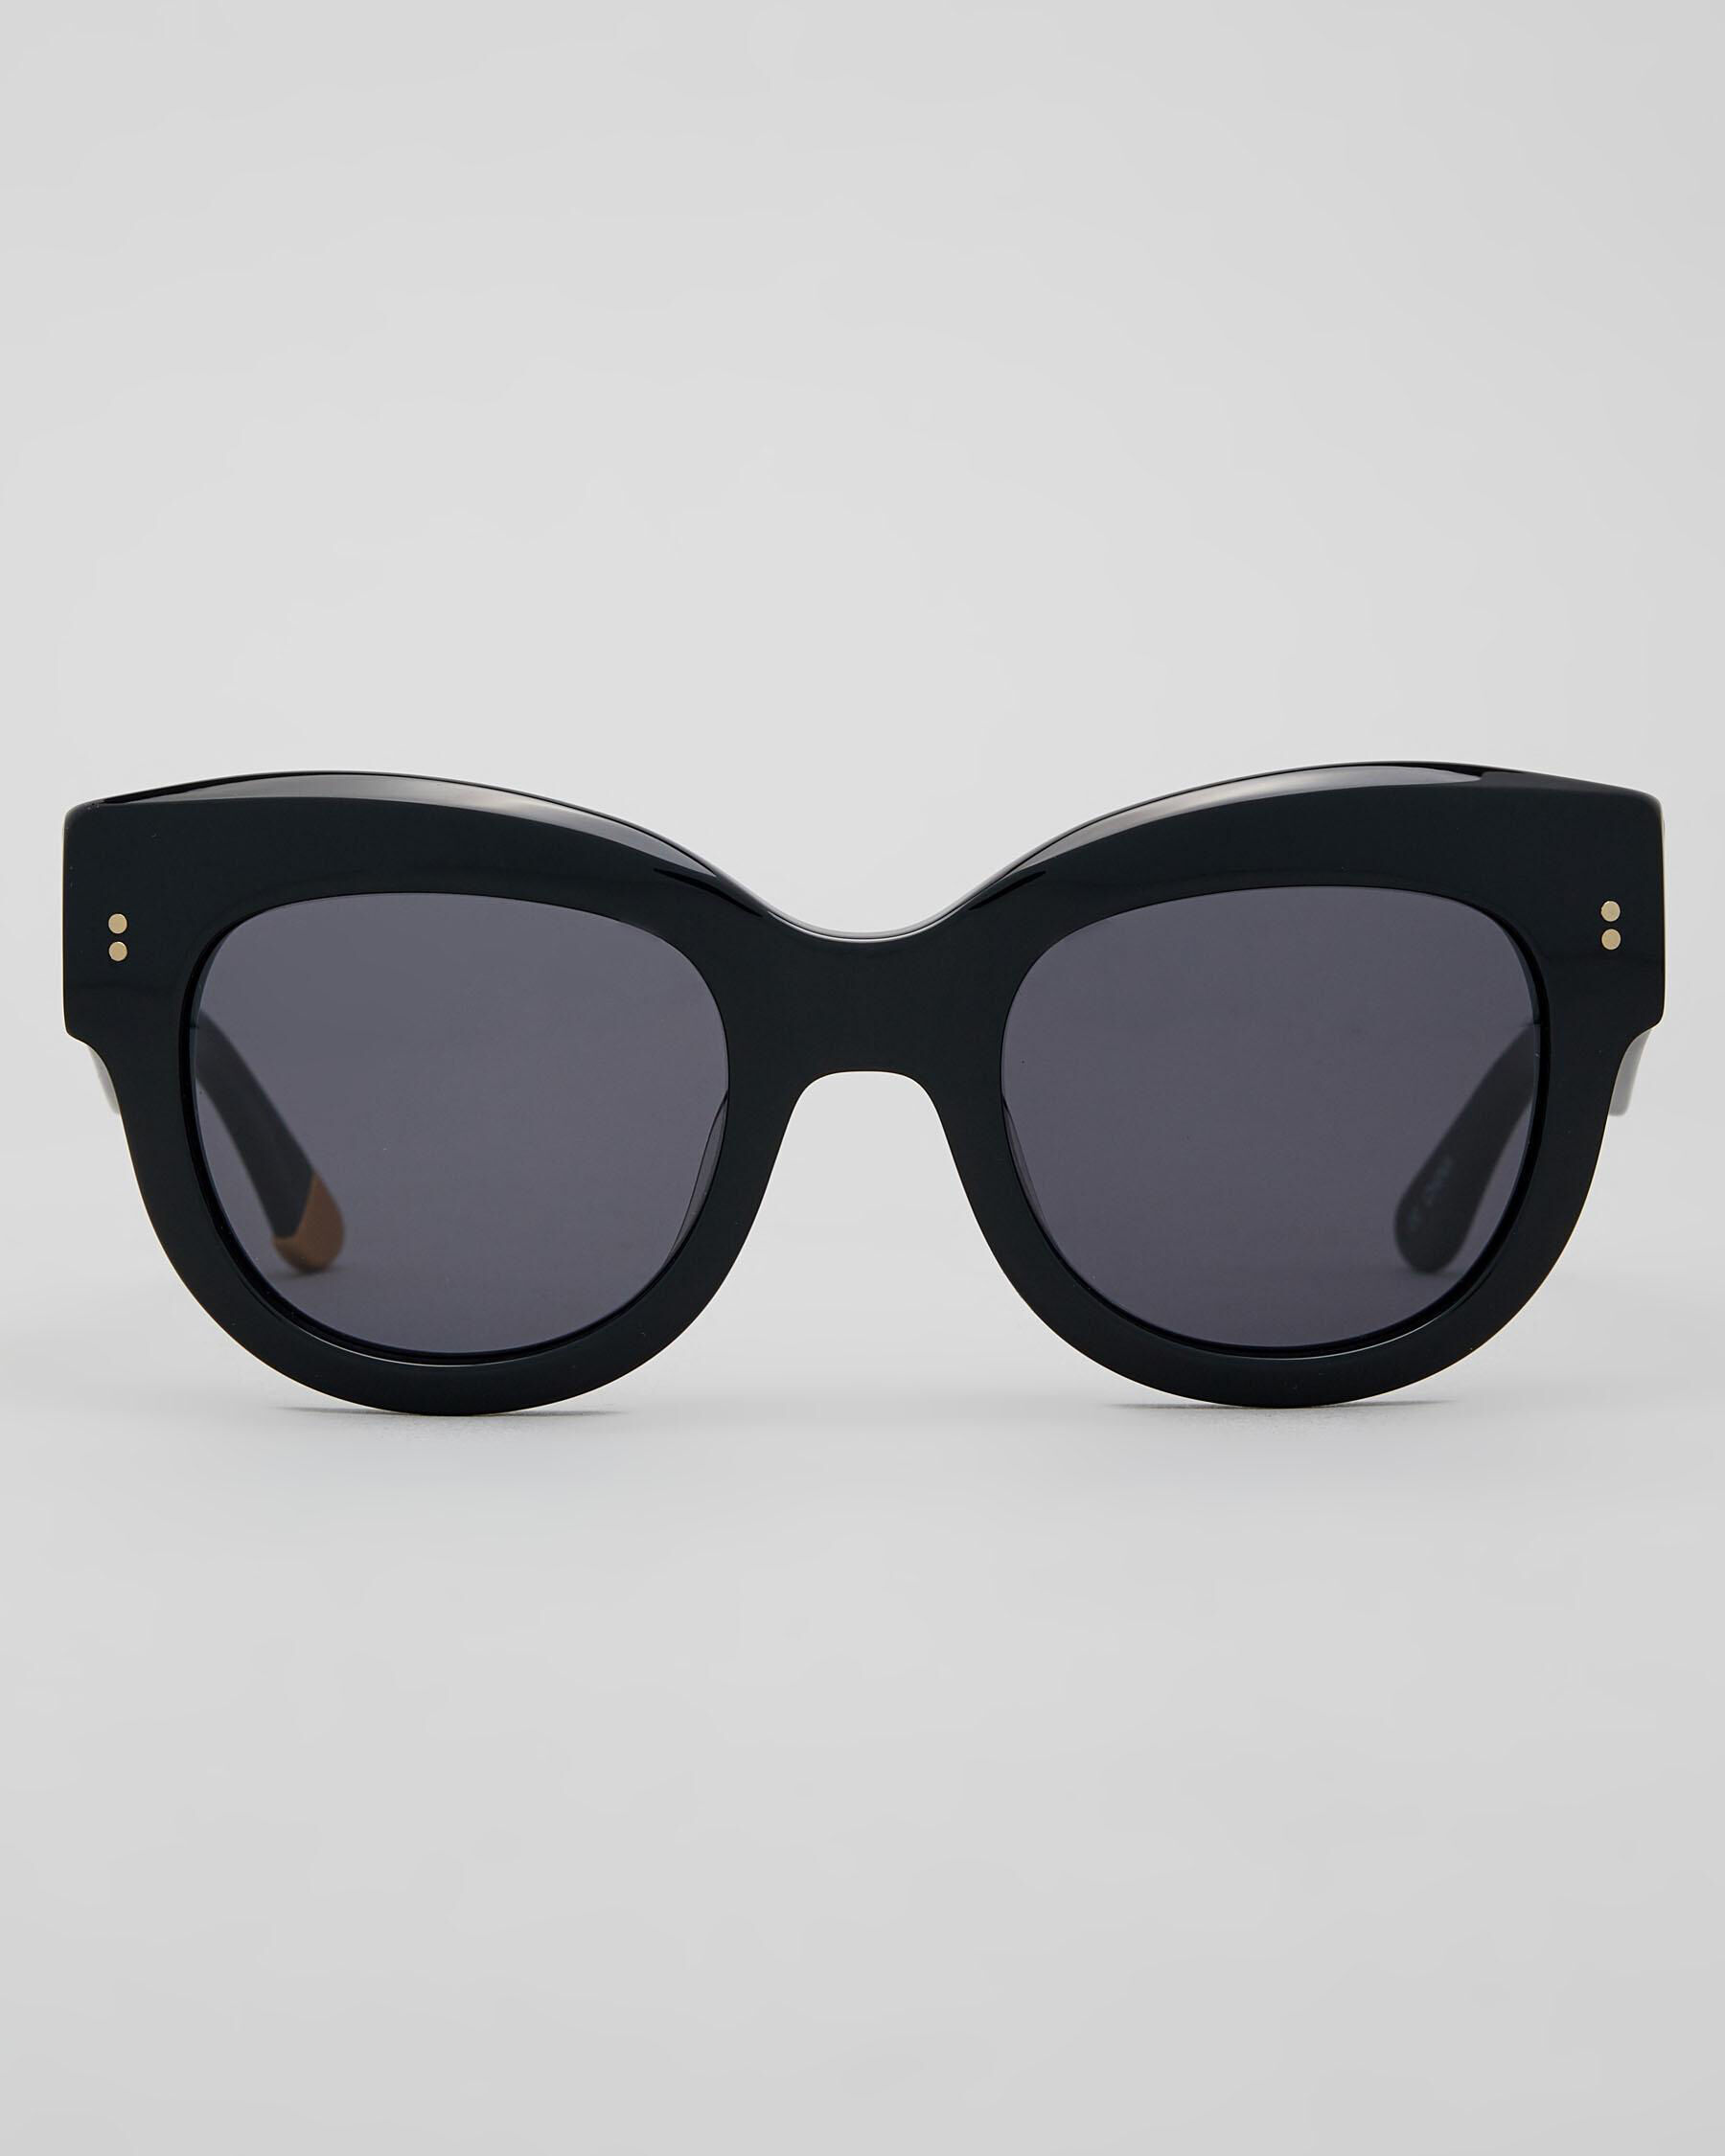 Sabre Nova Sunglasses In Black - FREE* Shipping & Easy Returns